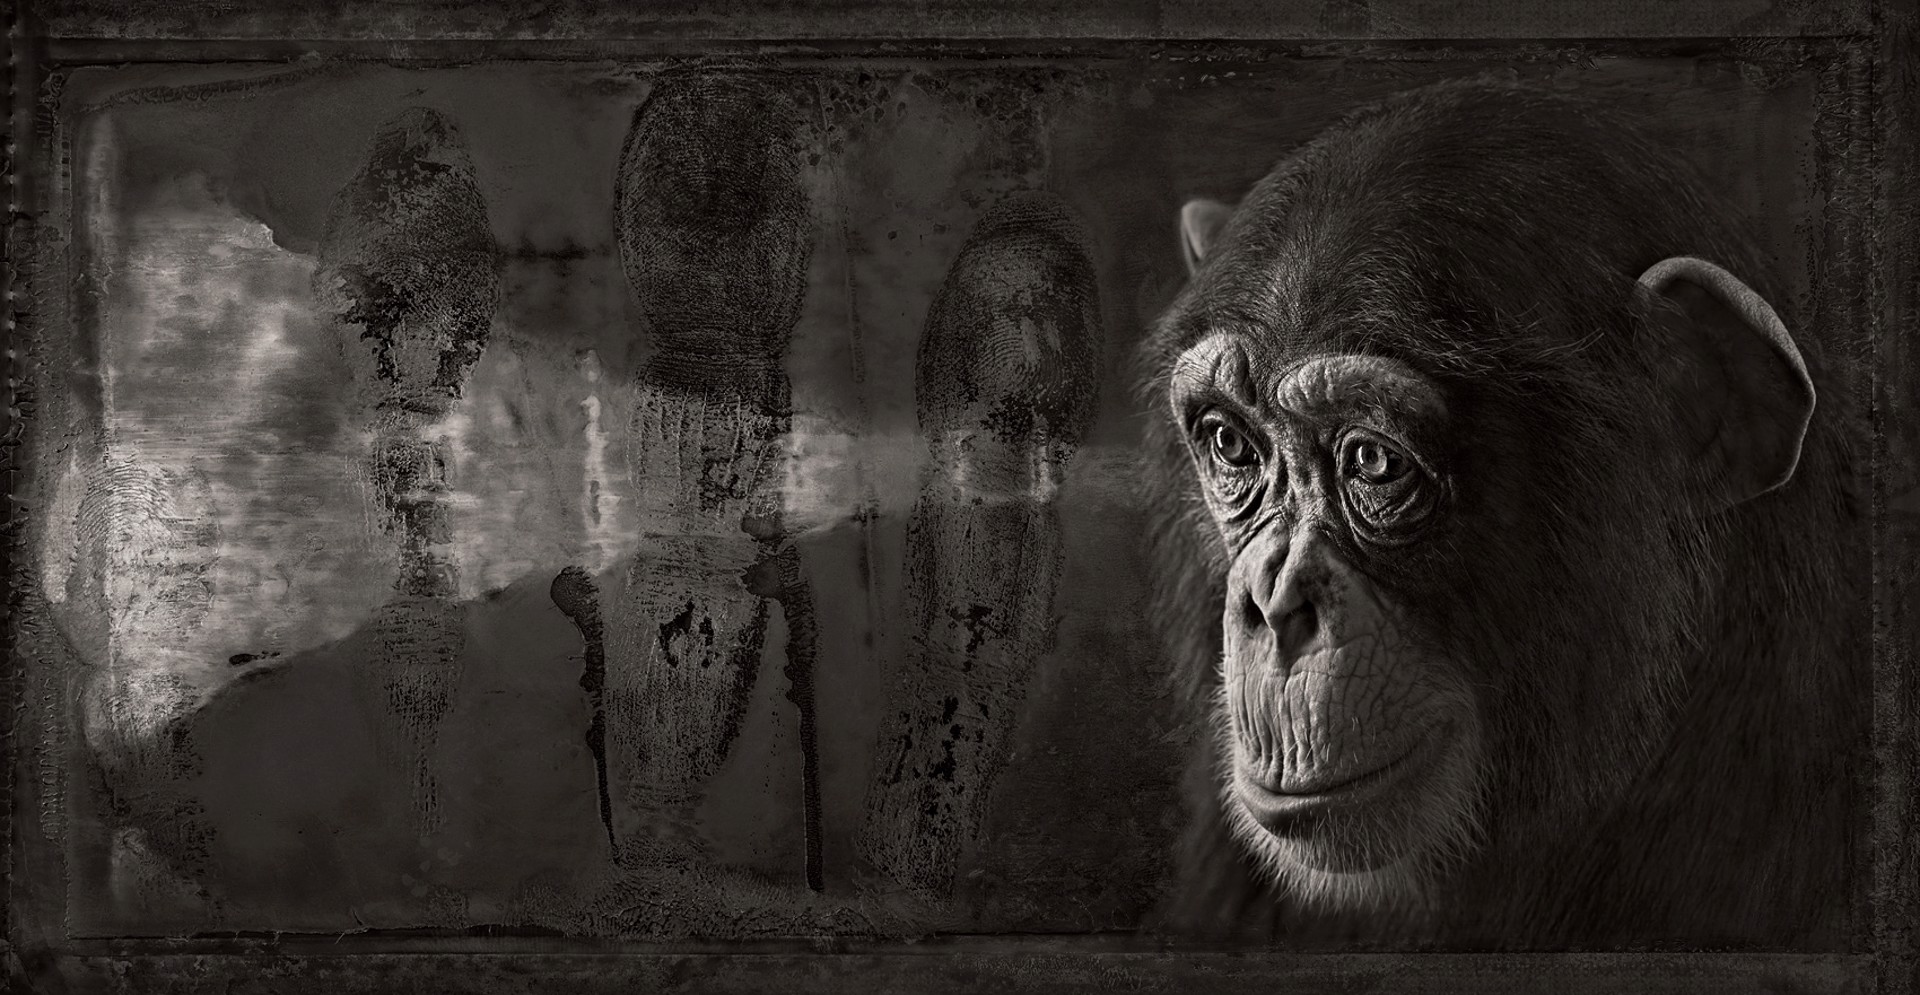 Artifact X, Chimpanzee by Brad Wilson